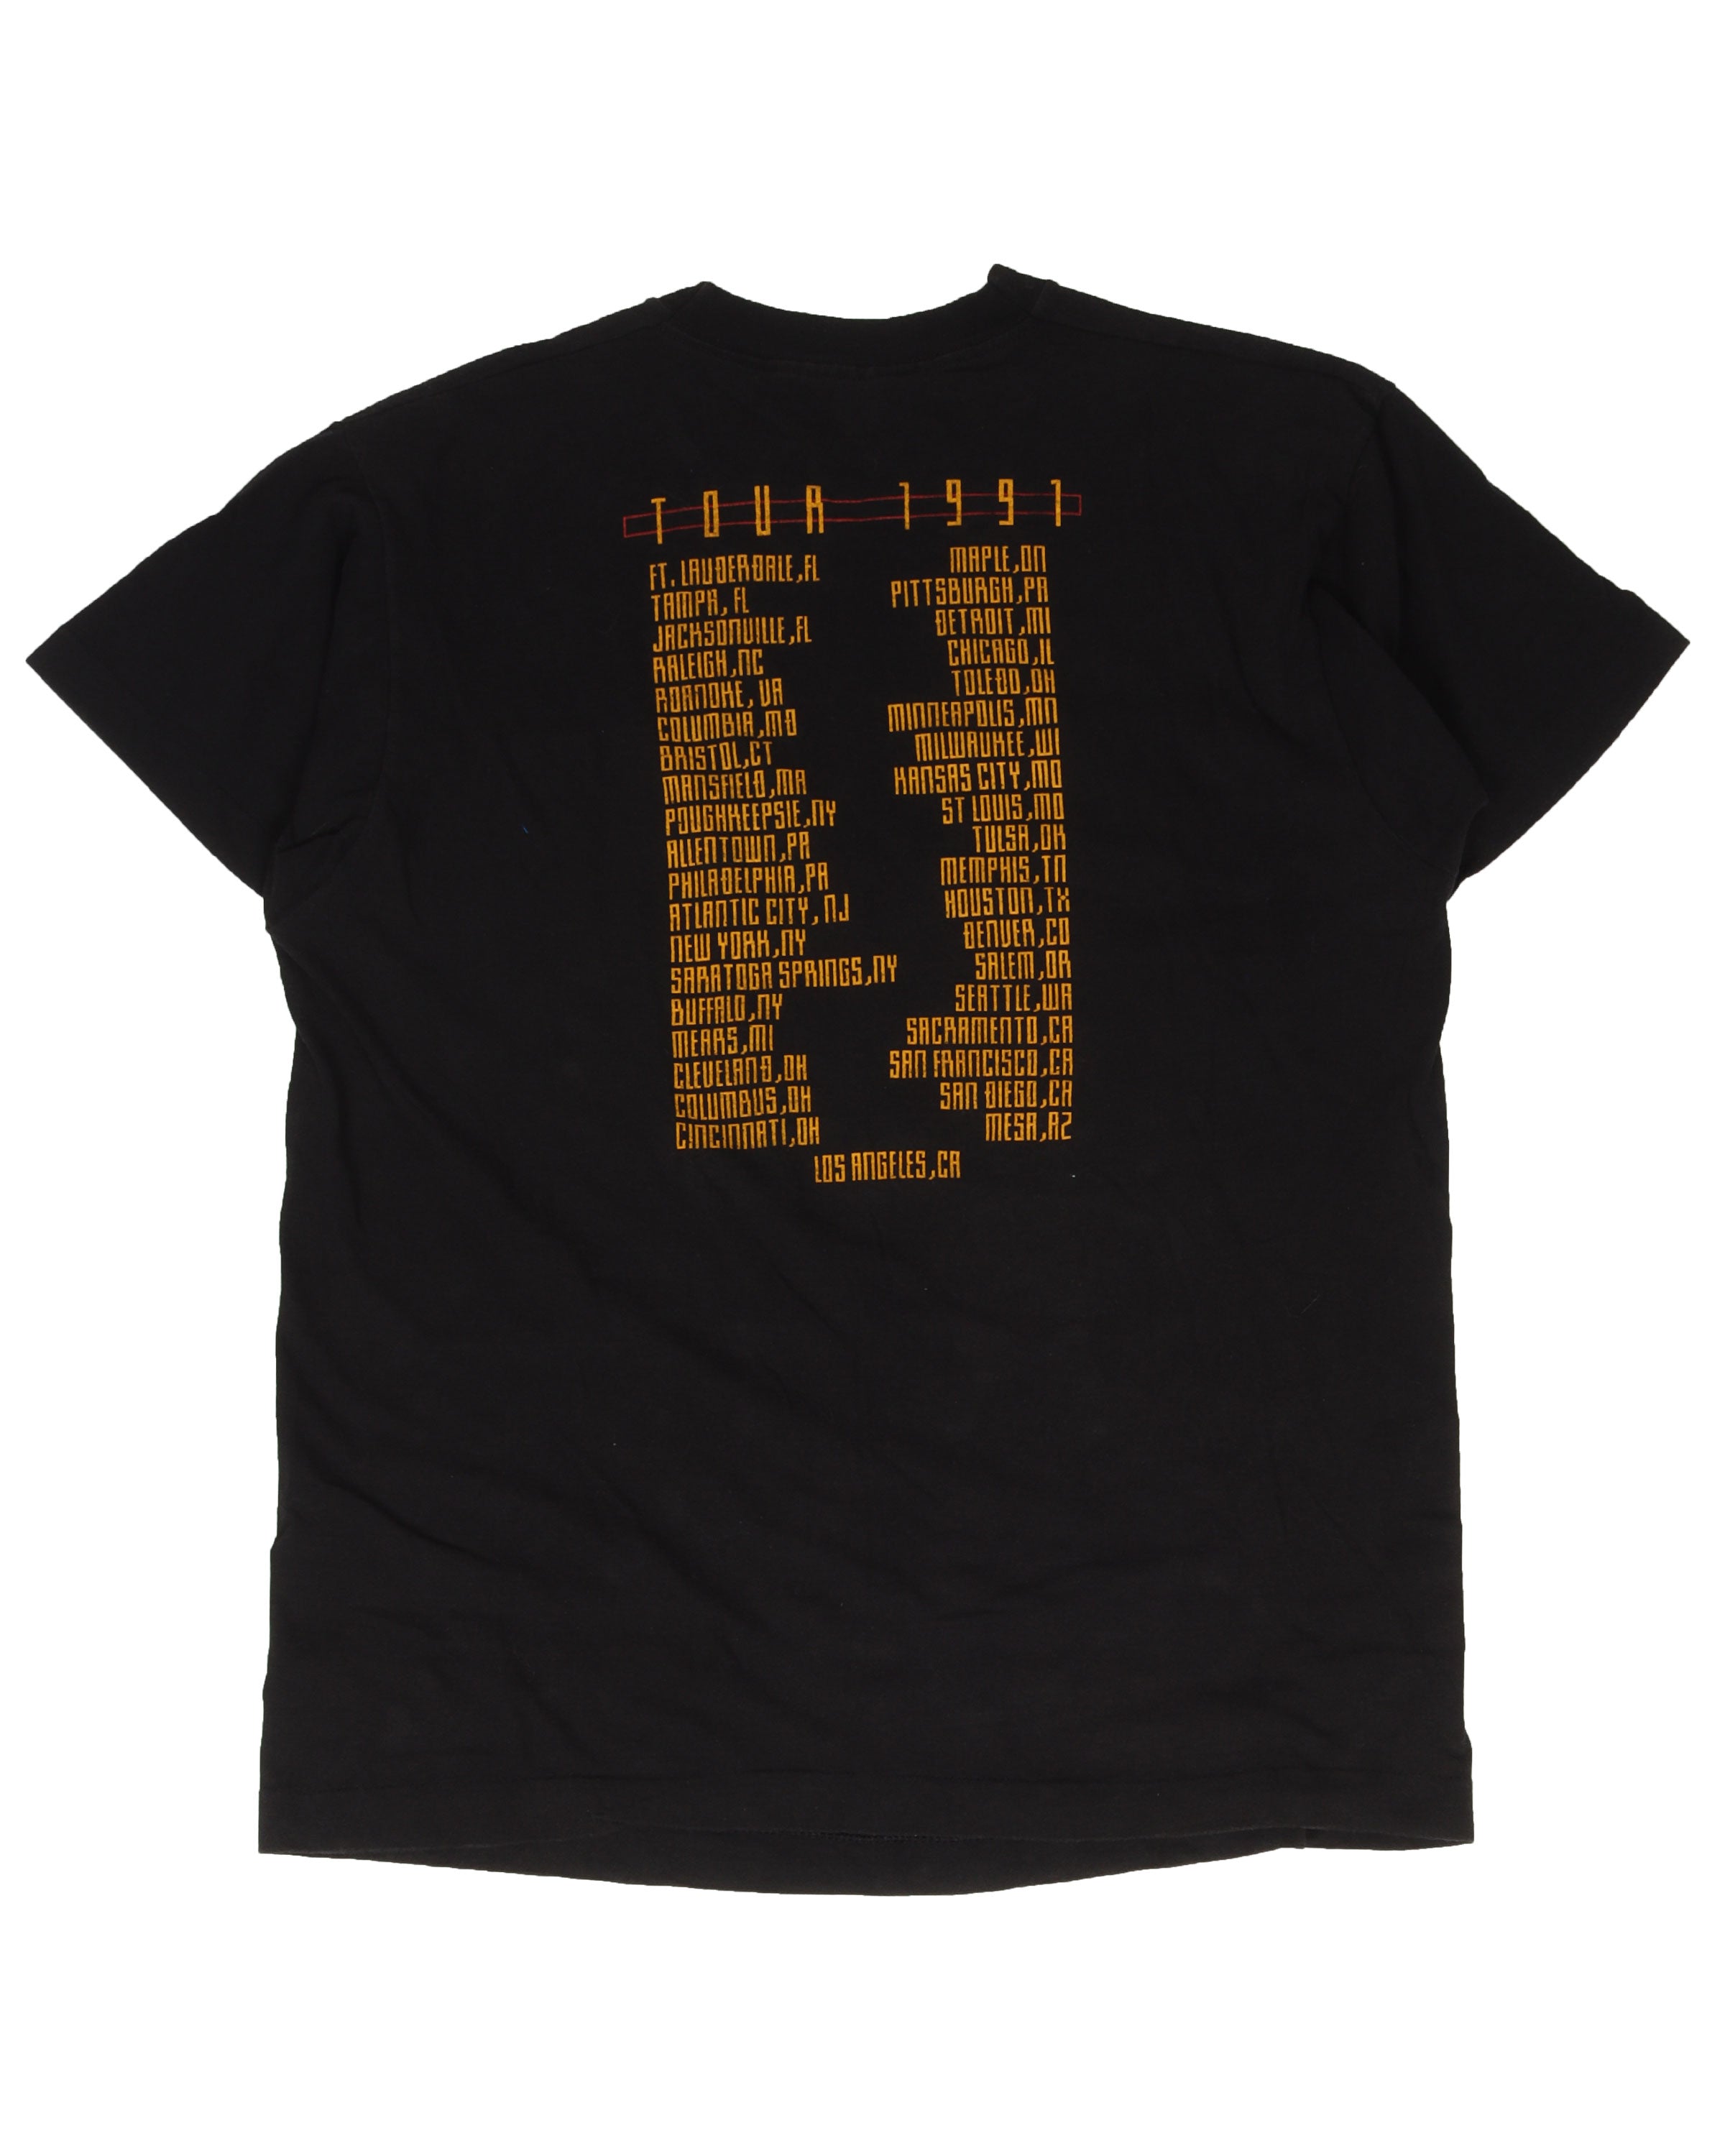 Styx "Edge Of The Century" 1991 Tour T-Shirt